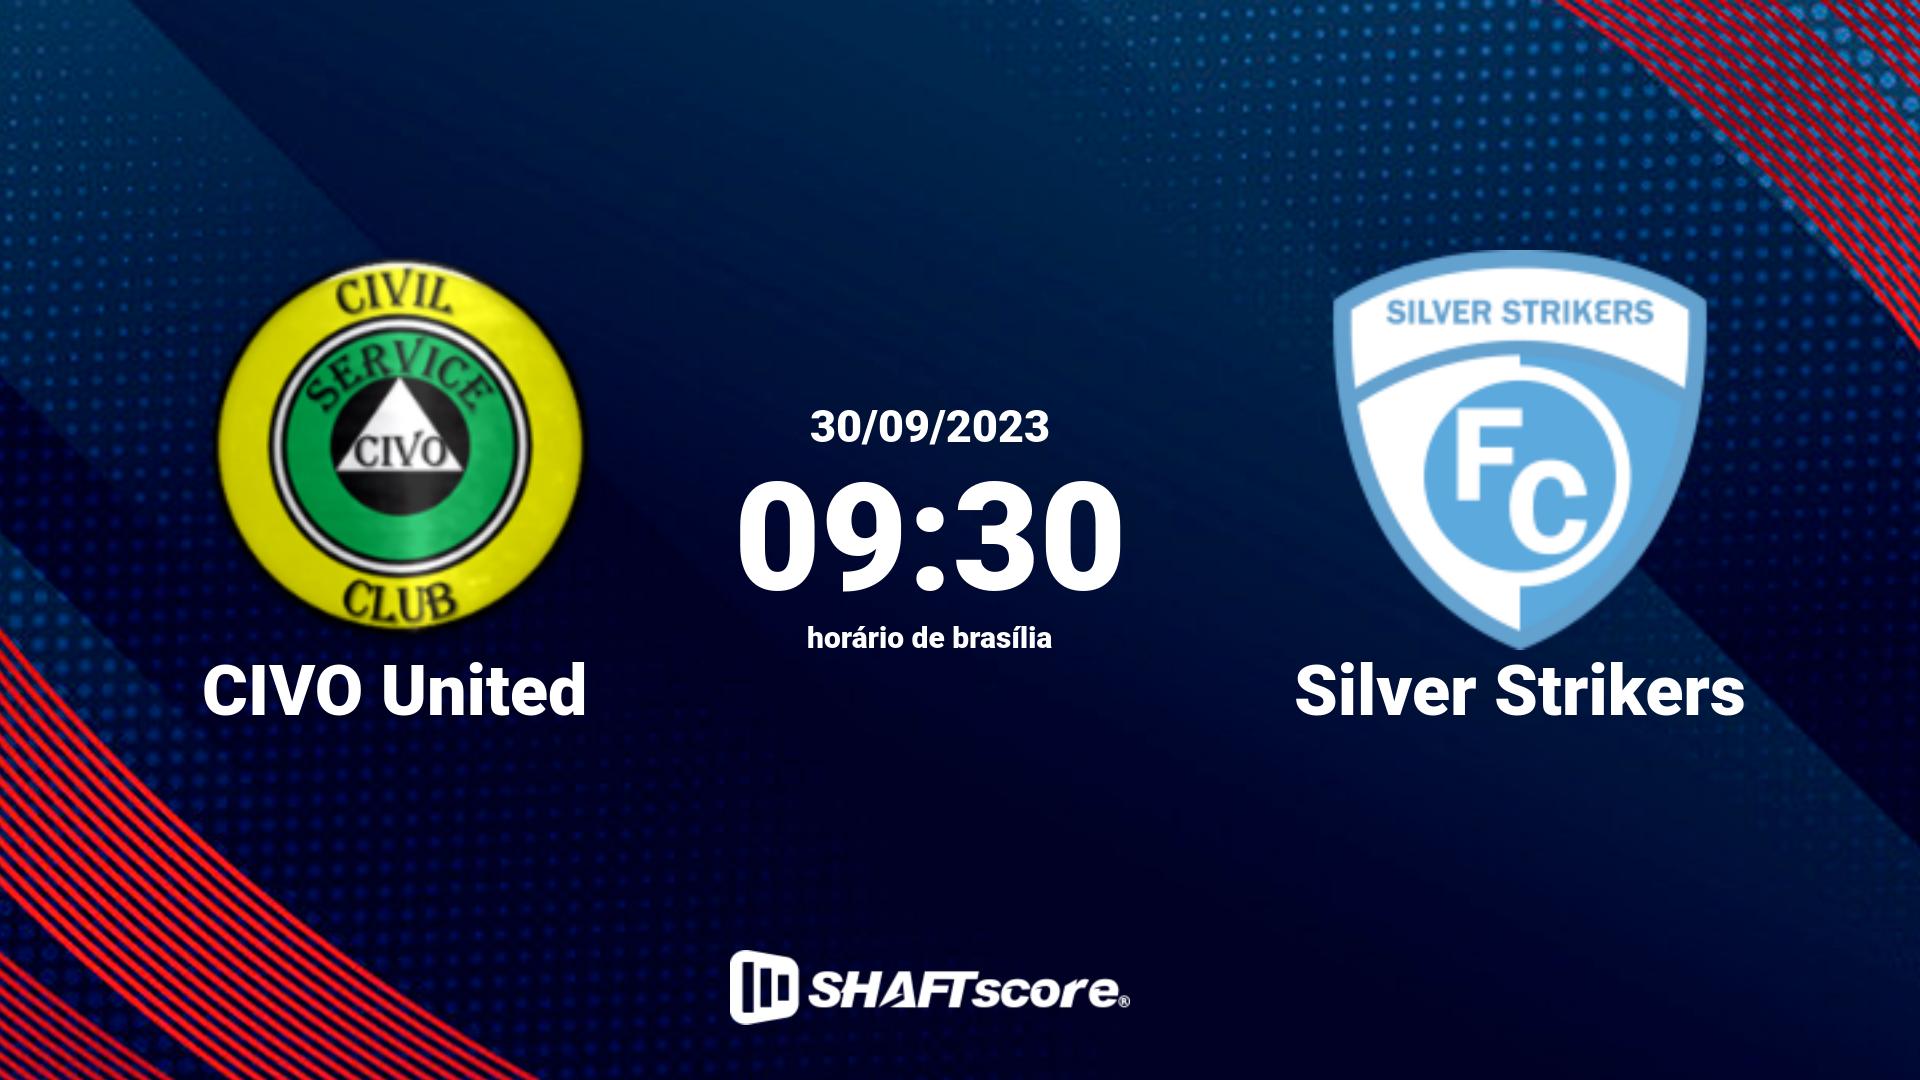 Estatísticas do jogo CIVO United vs Silver Strikers 30.09 09:30